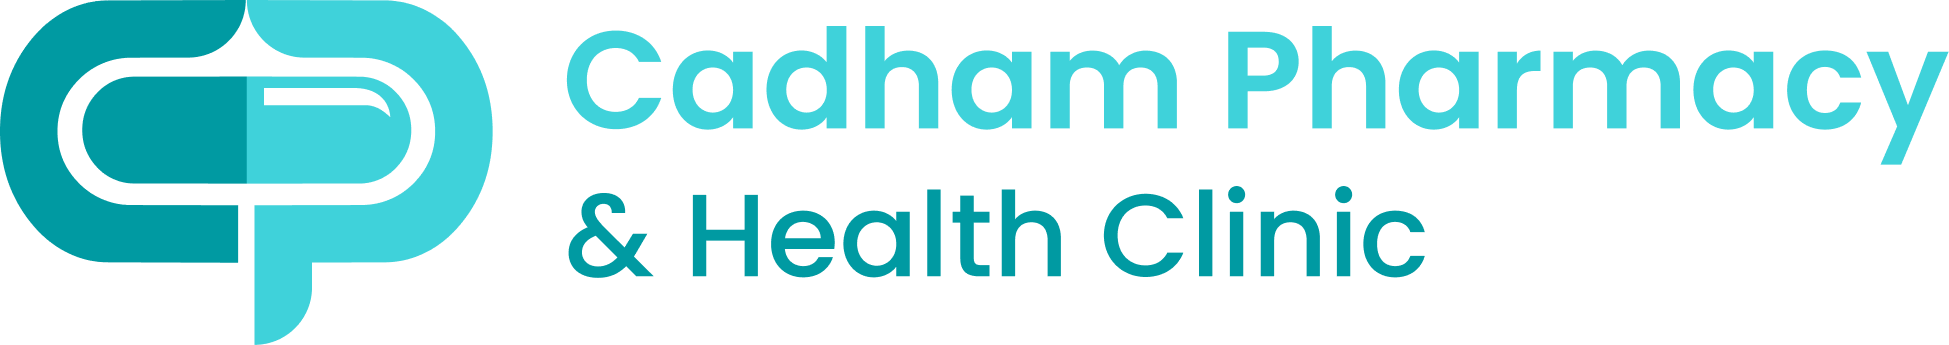 Cadham Pharmacy & Health Clinic